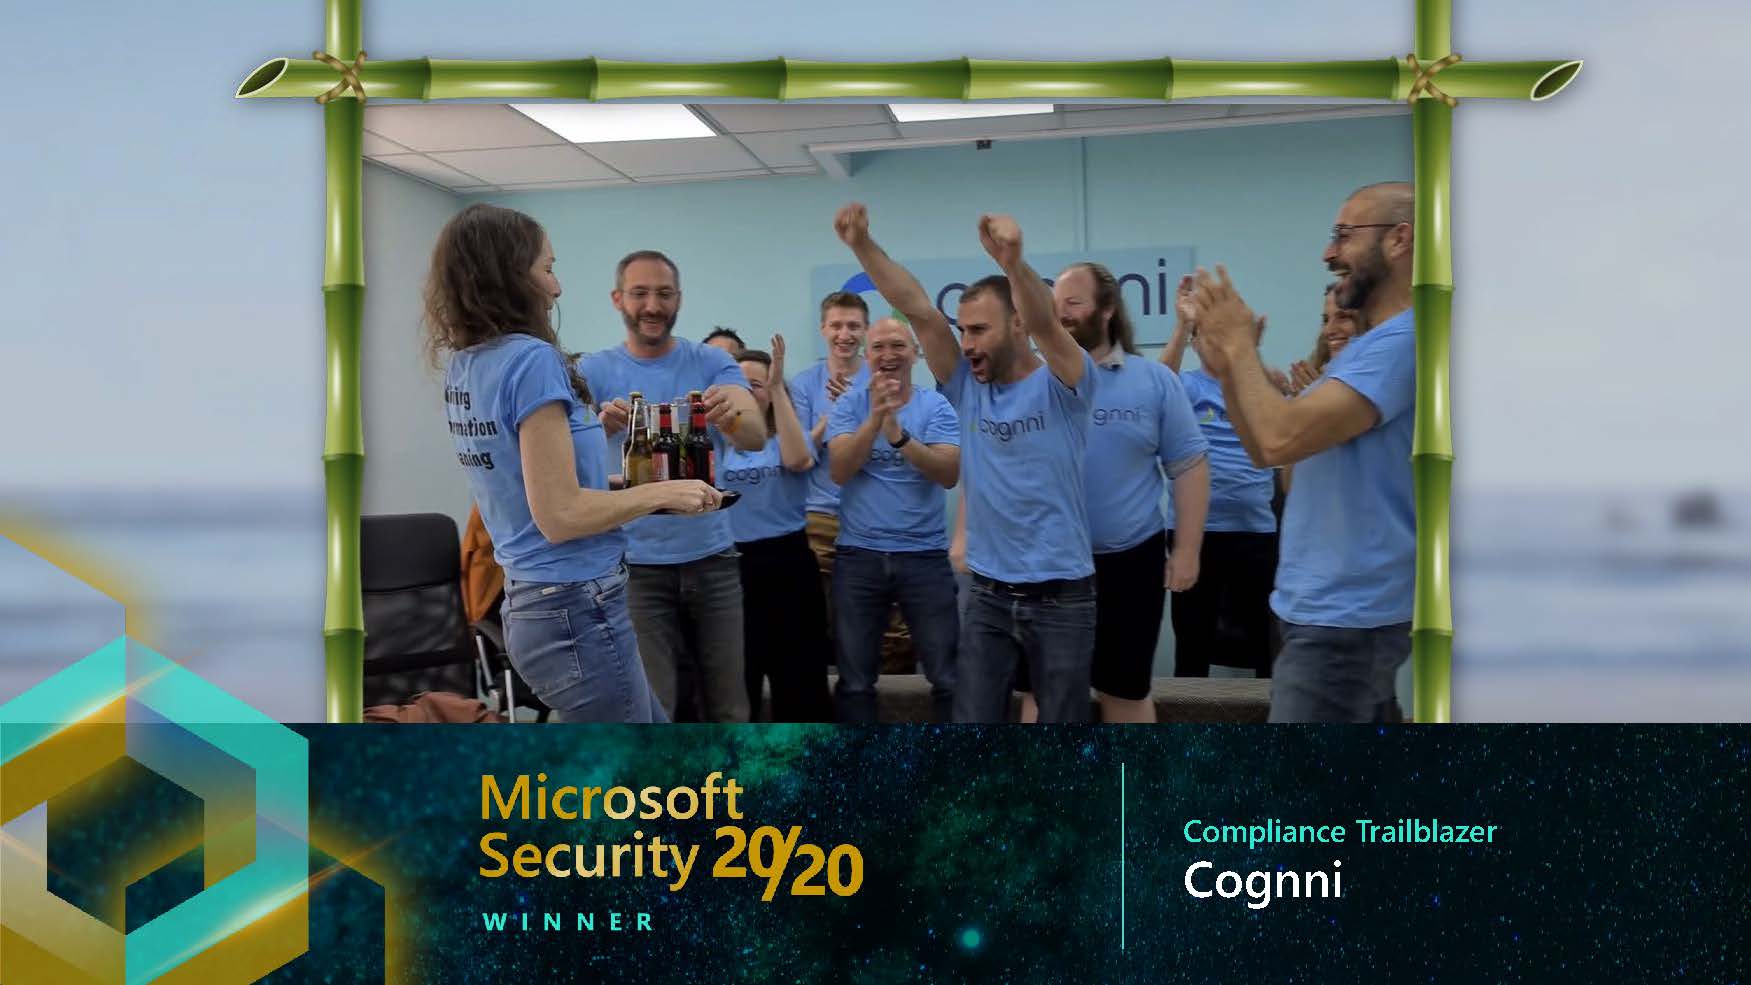 Cognni wins Microsoft Security 20/20 award, becoming winner of Compliance Trailblazer